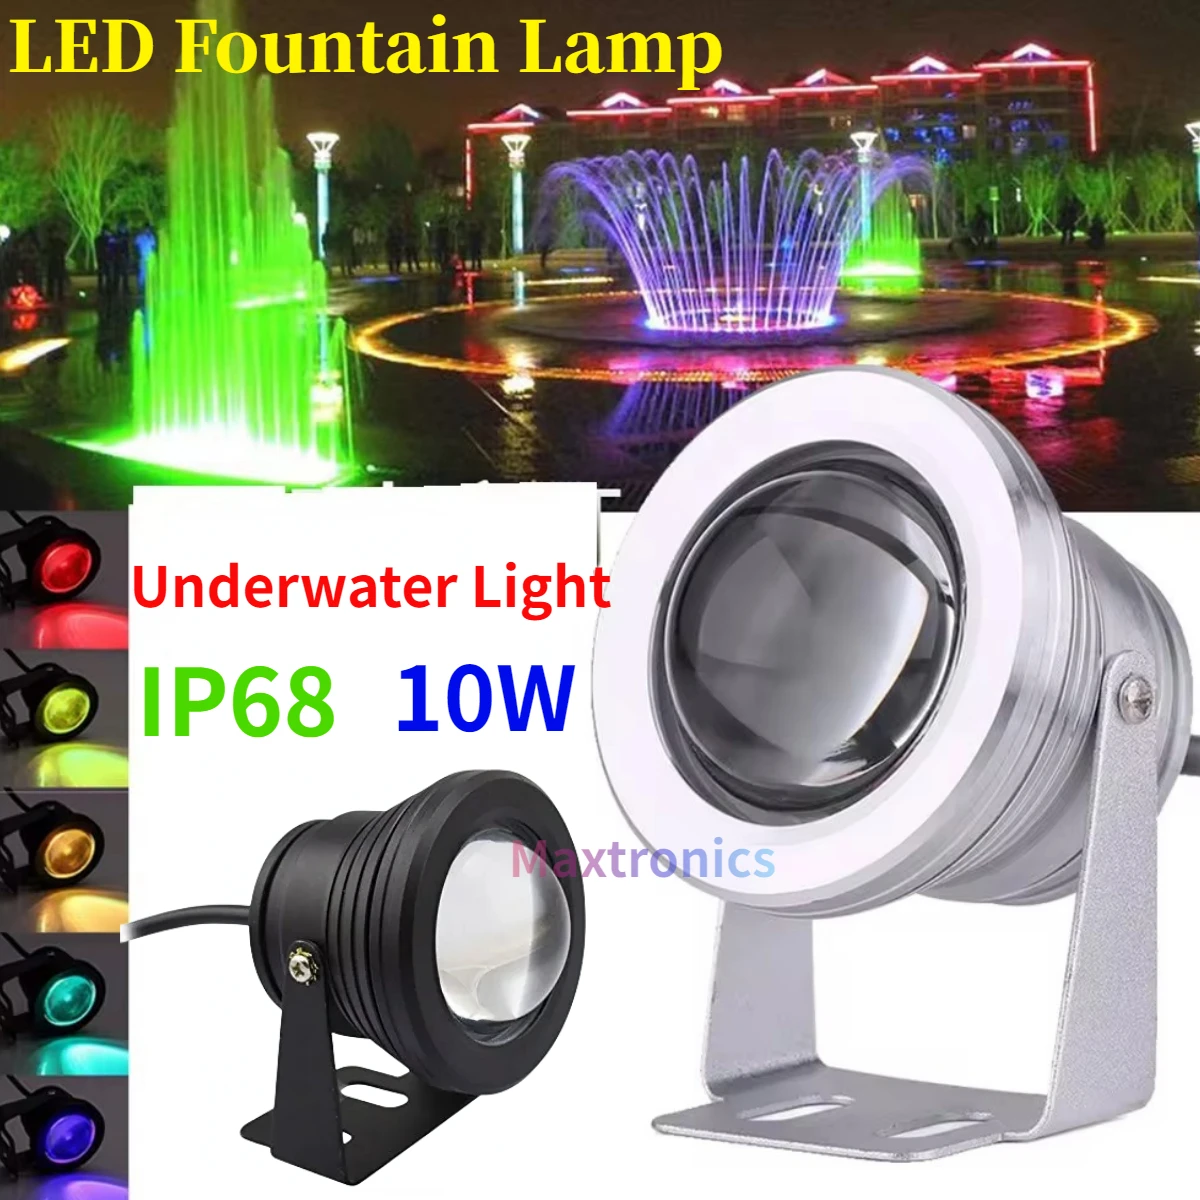 

DC12V 10W LED Fountain Lamp Spotlight High Waterproof IP68 RGB/Warm White/White/Red/Blue/Green for Landscape Underwater Light